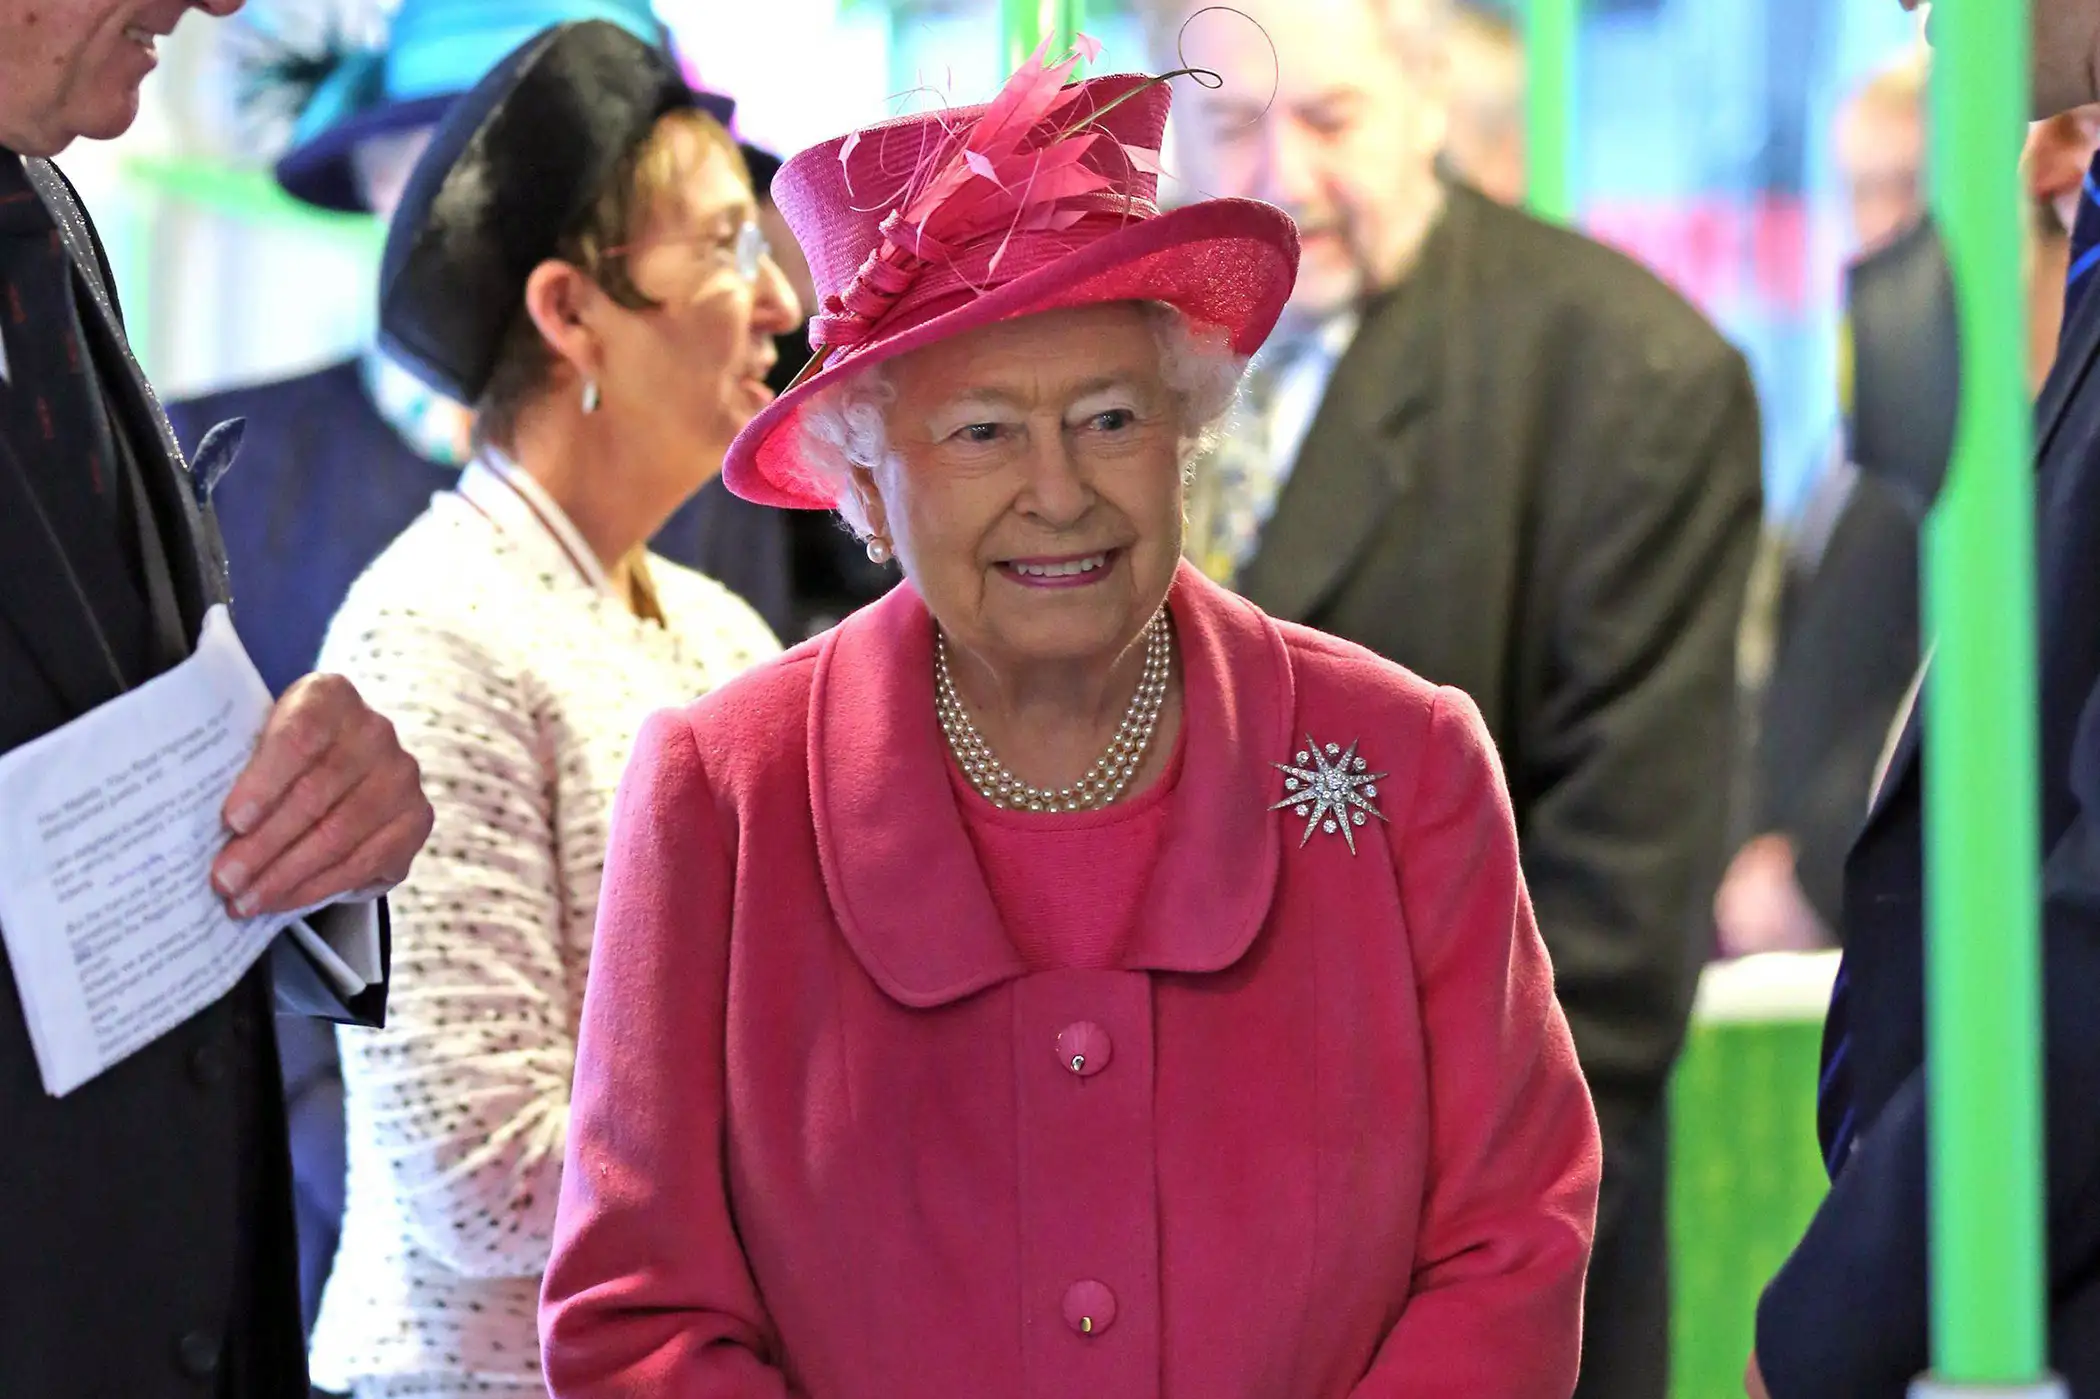 Queen Elizabeth visits the Metroline Tramline Extension in Birmingham, November 19, 2015